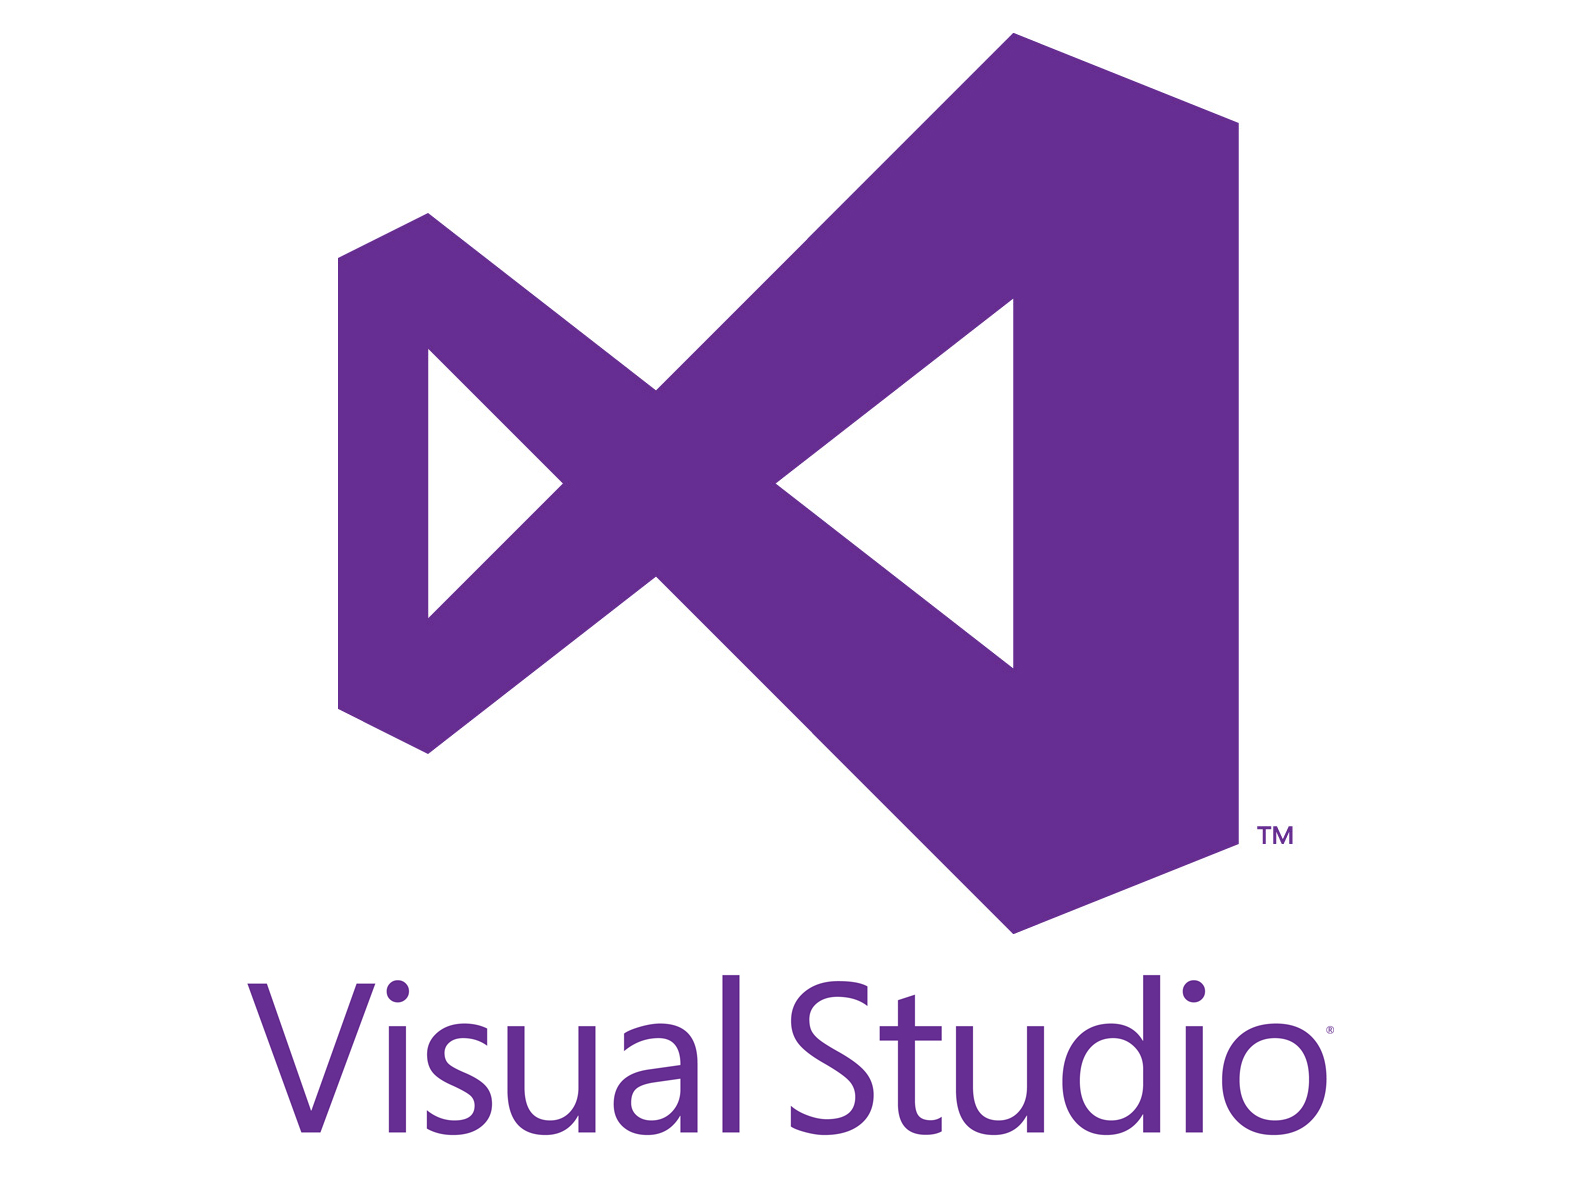 ms visual studio 2015